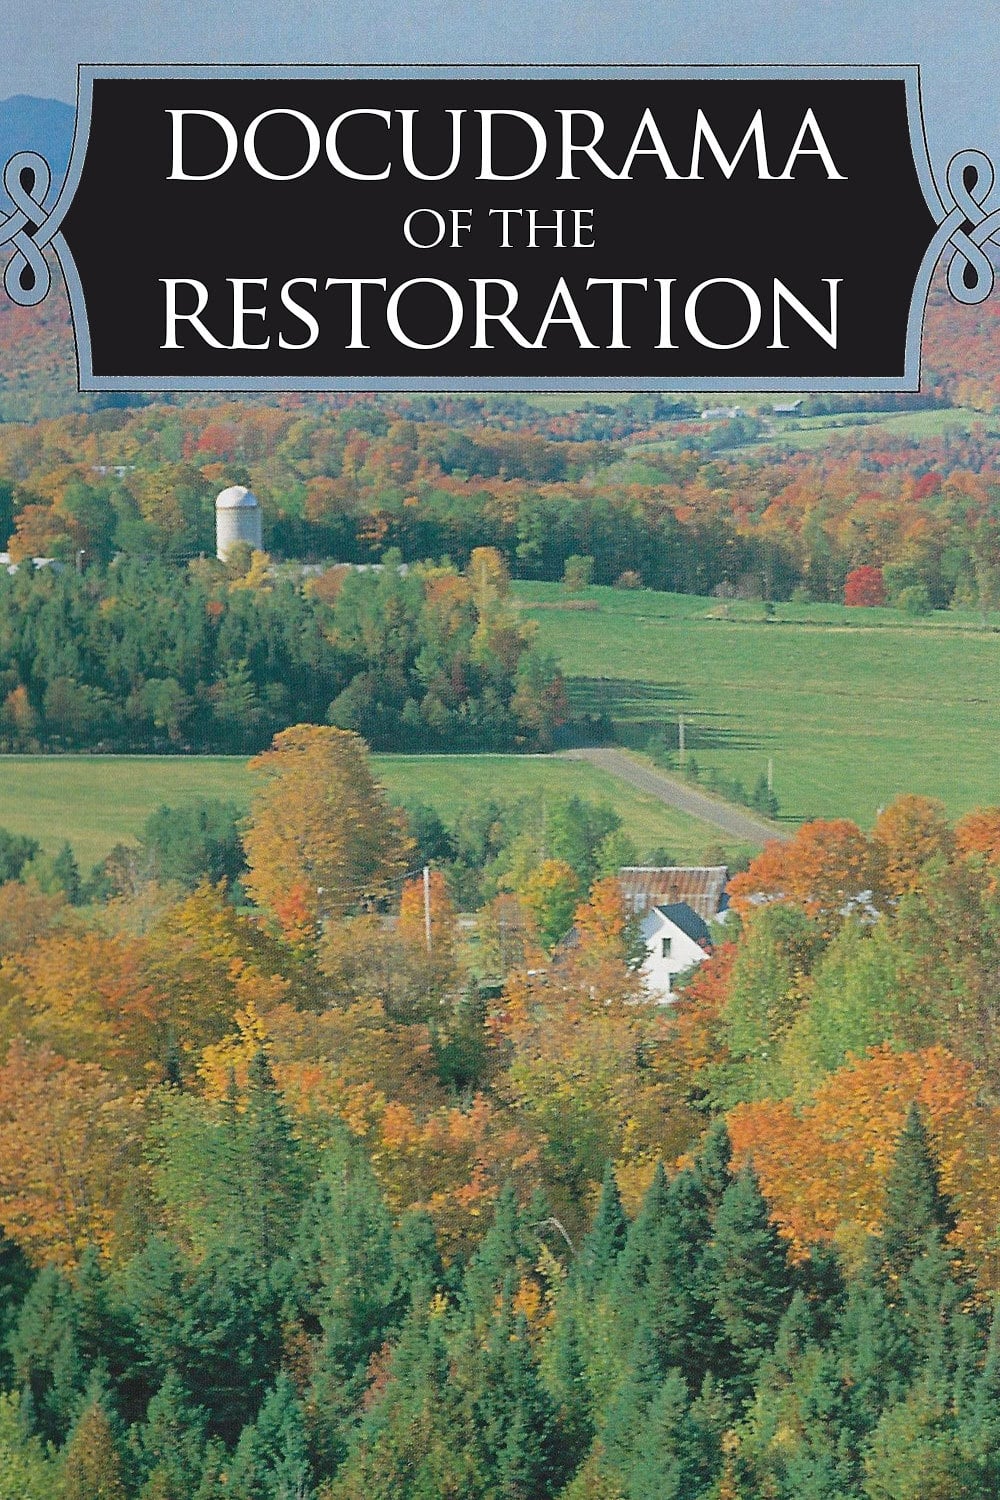 The Docudrama of the Restoration